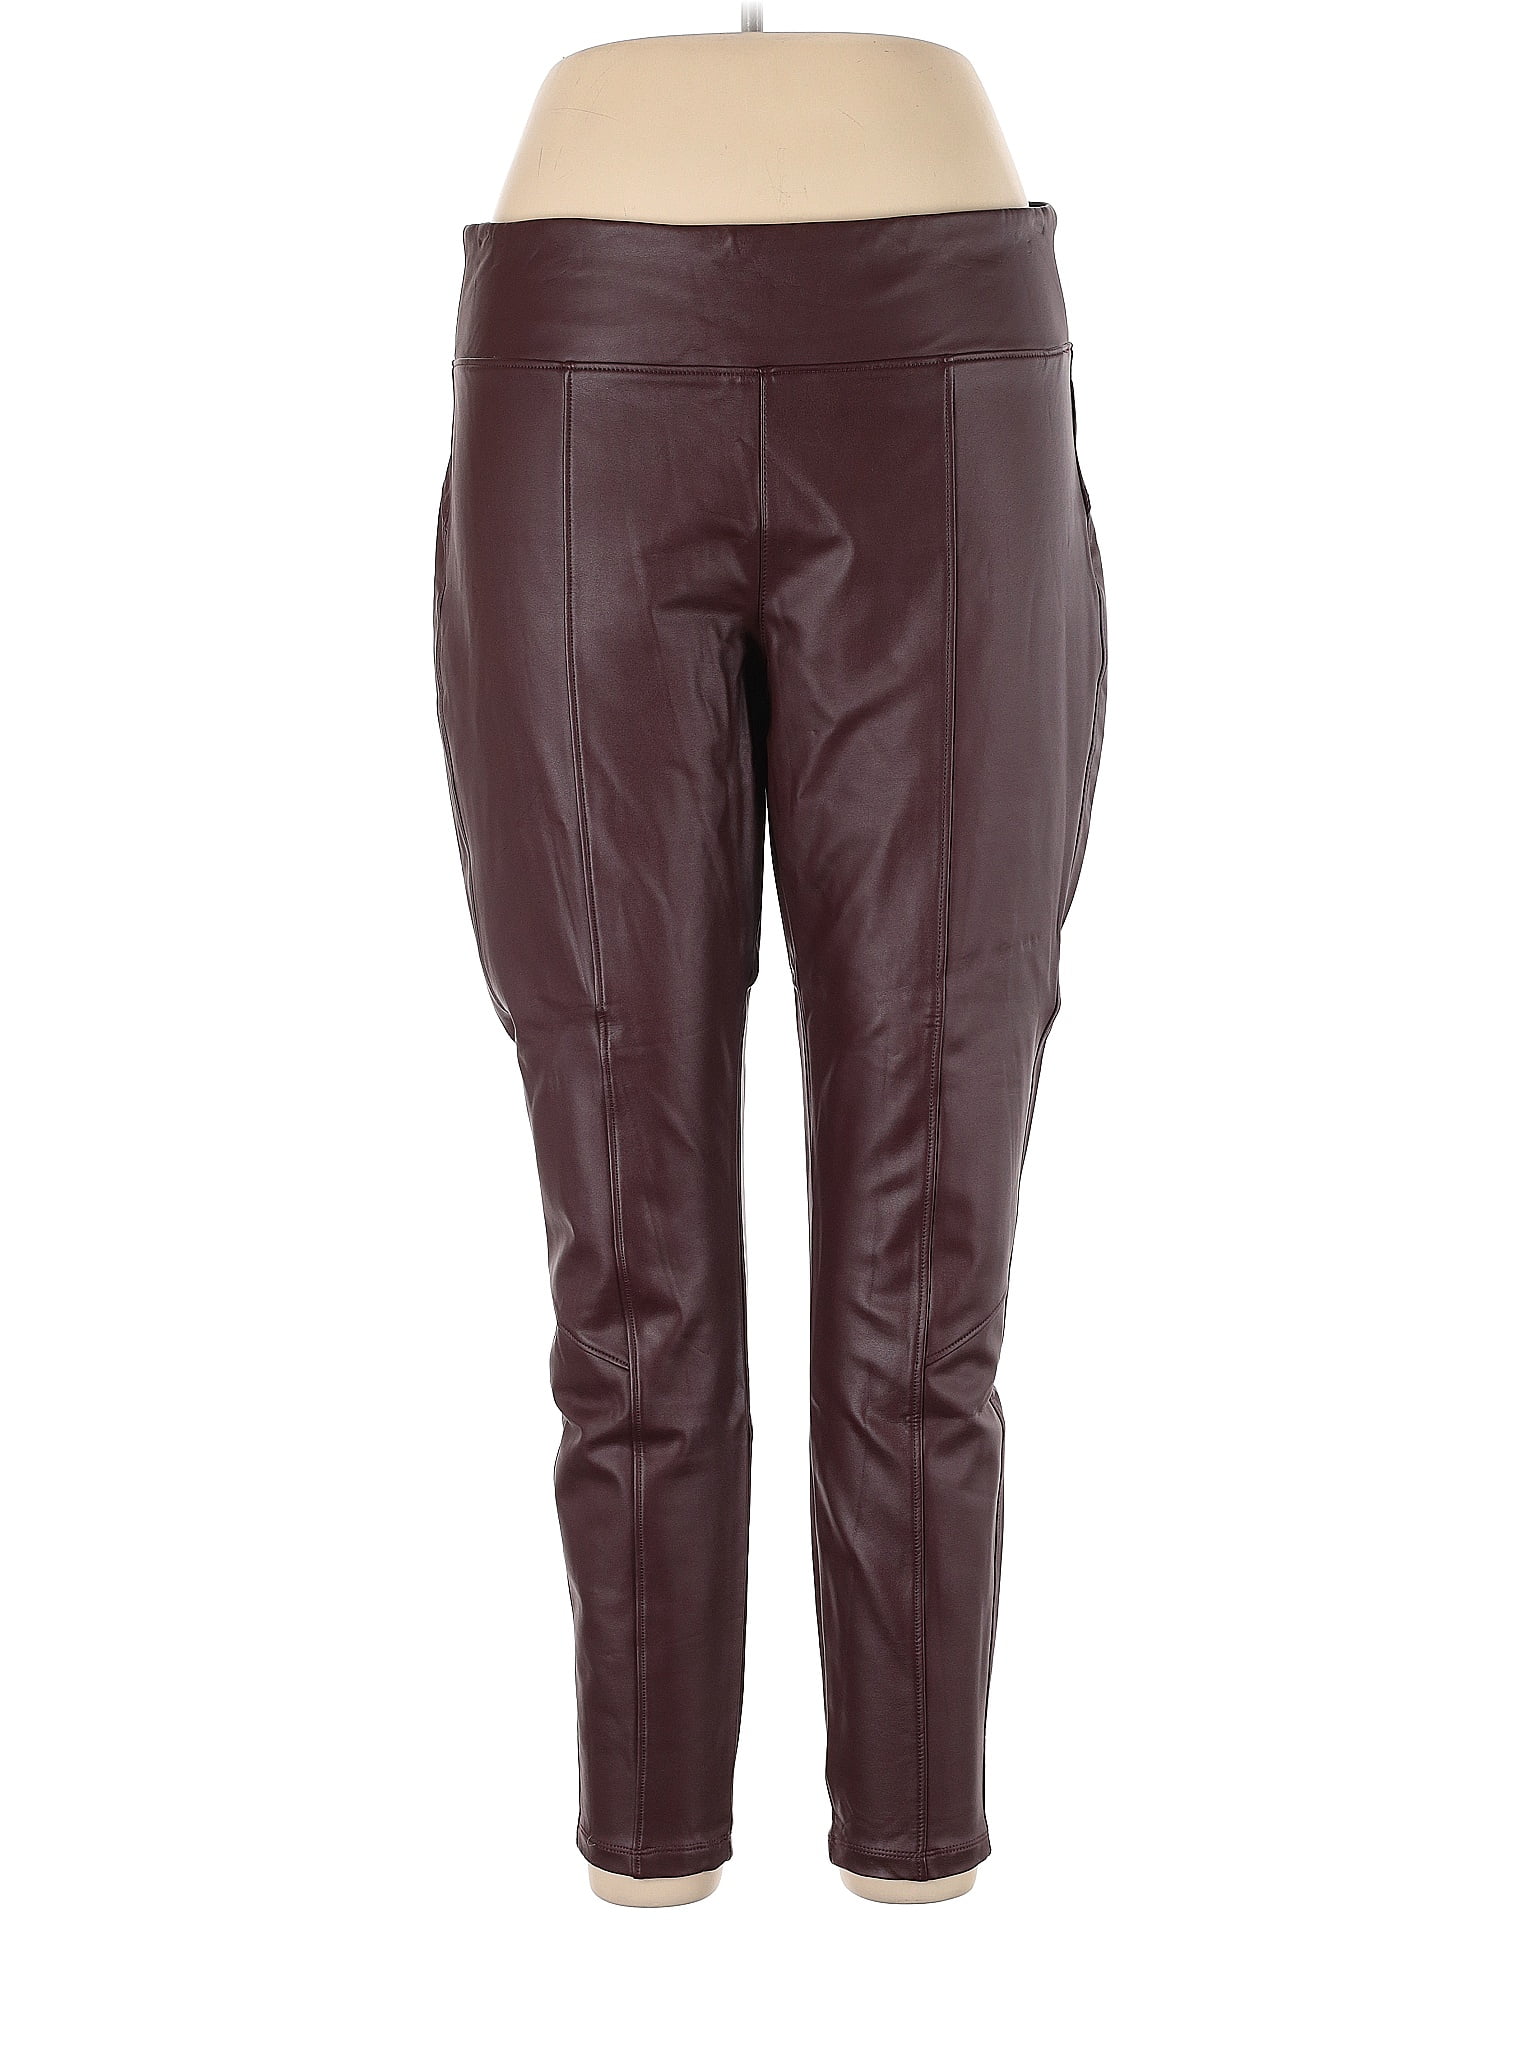 Rock & Republic Solid Brown Burgundy Faux Leather Pants Size XL